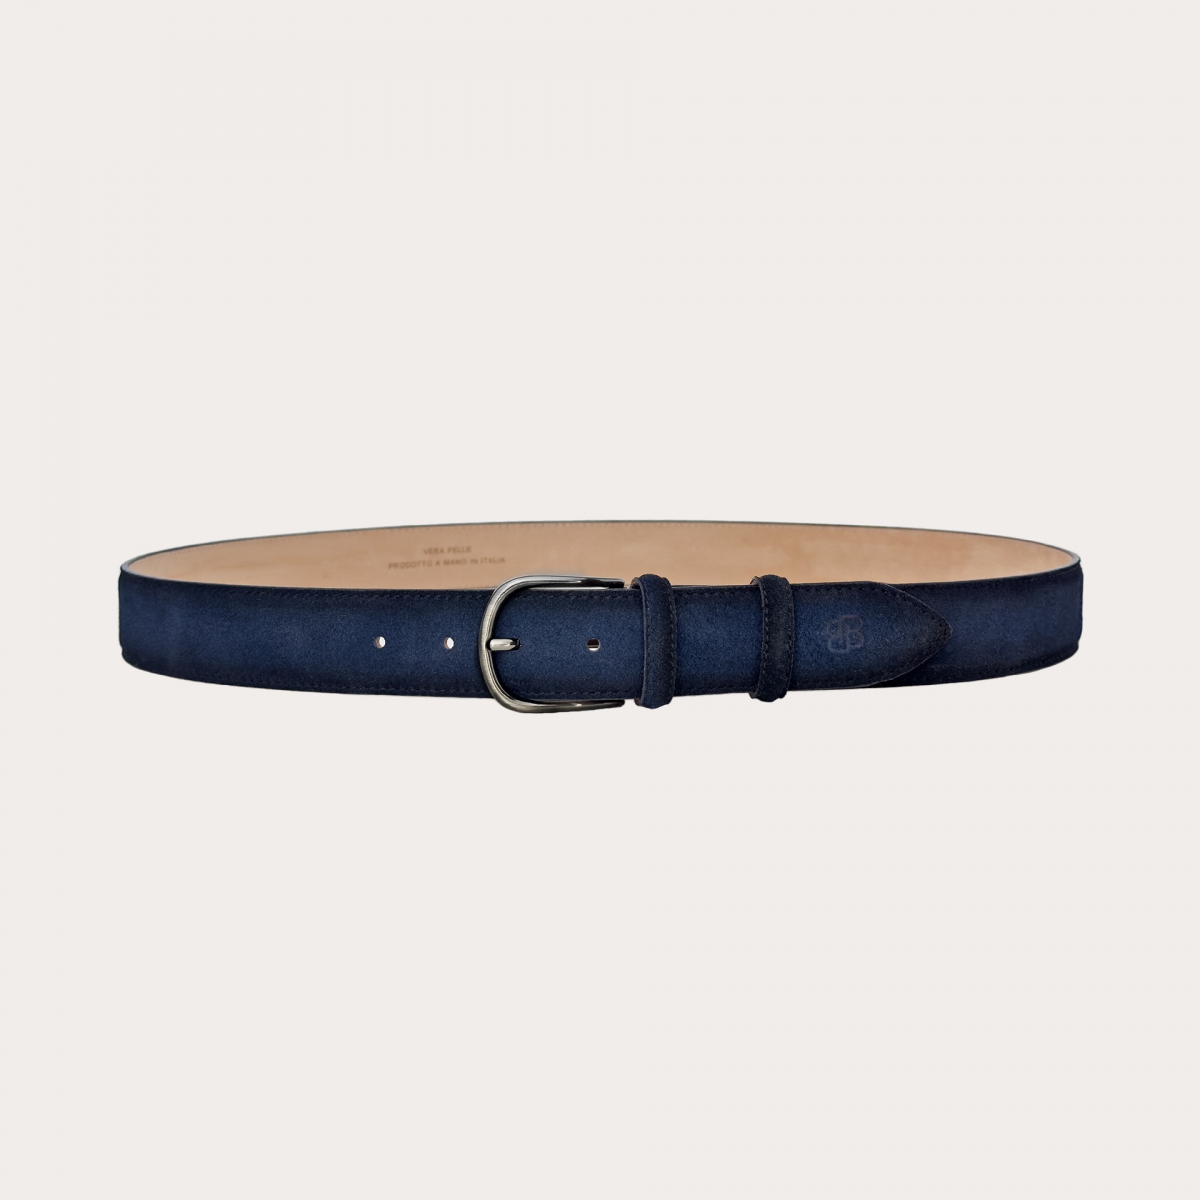 Navy faded blue suede belt